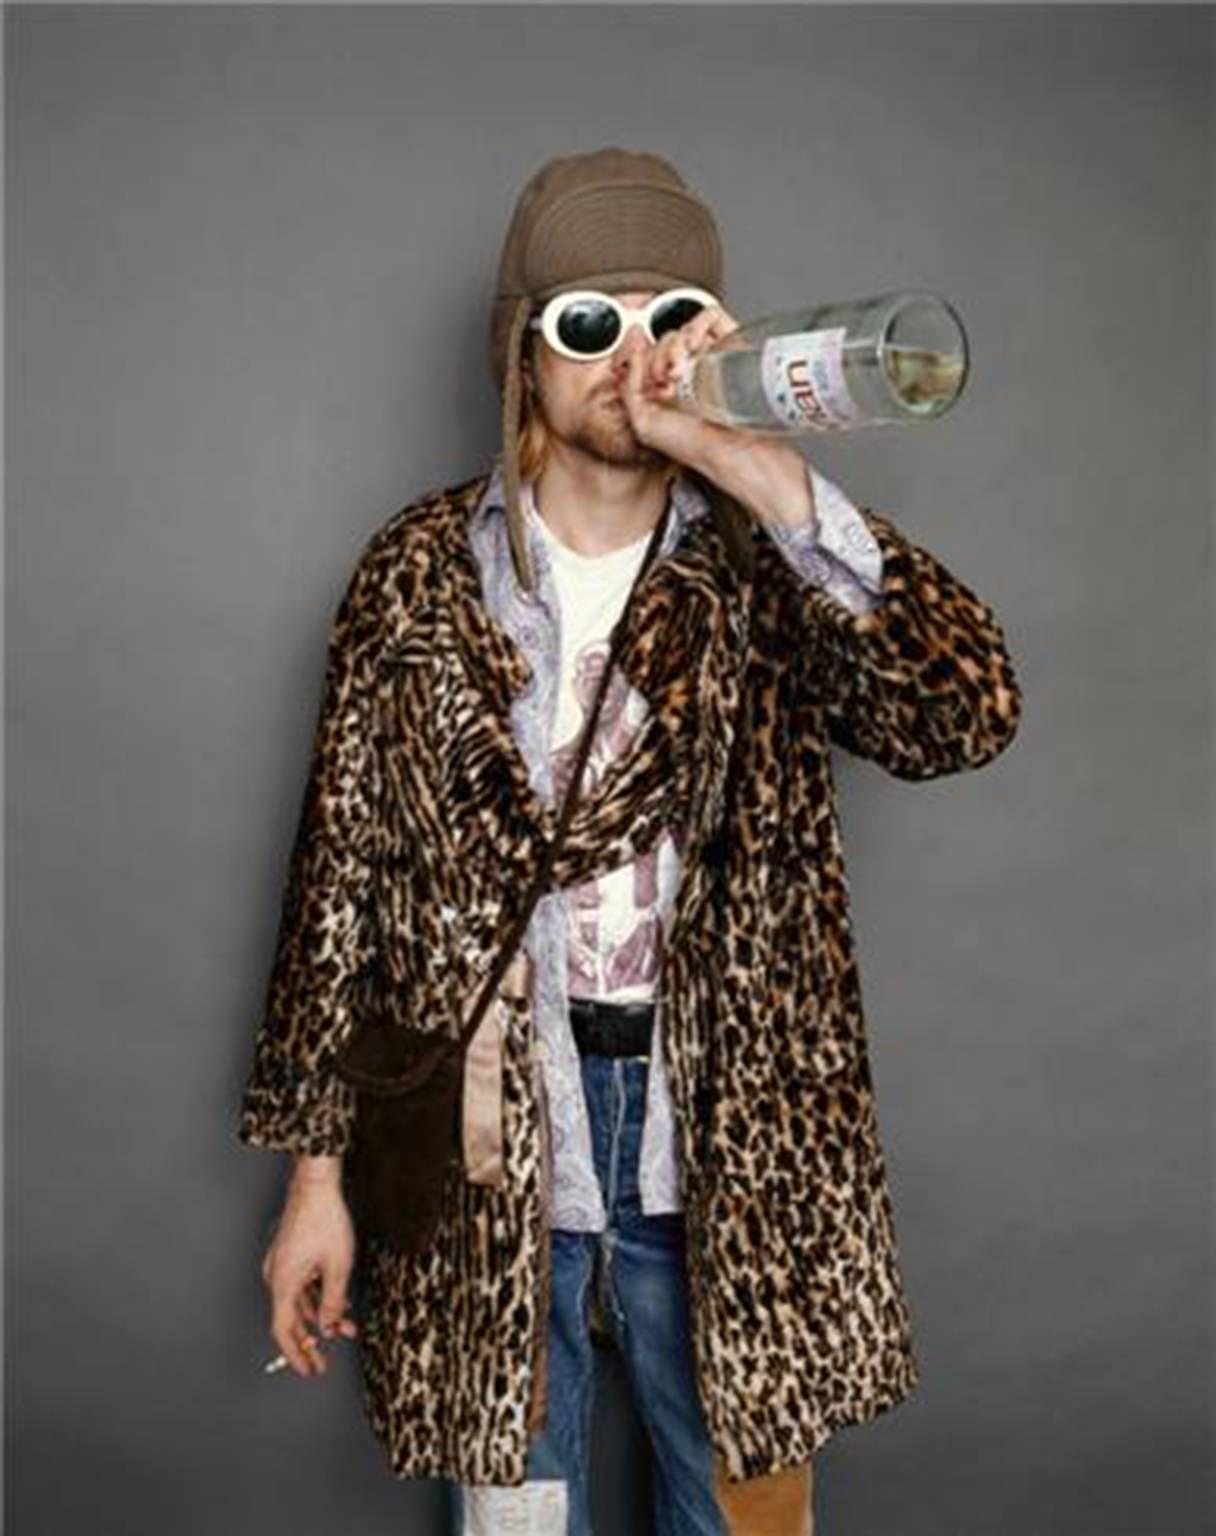 Jesse Frohman Portrait Photograph - Kurt Cobain; Drinking Evian water